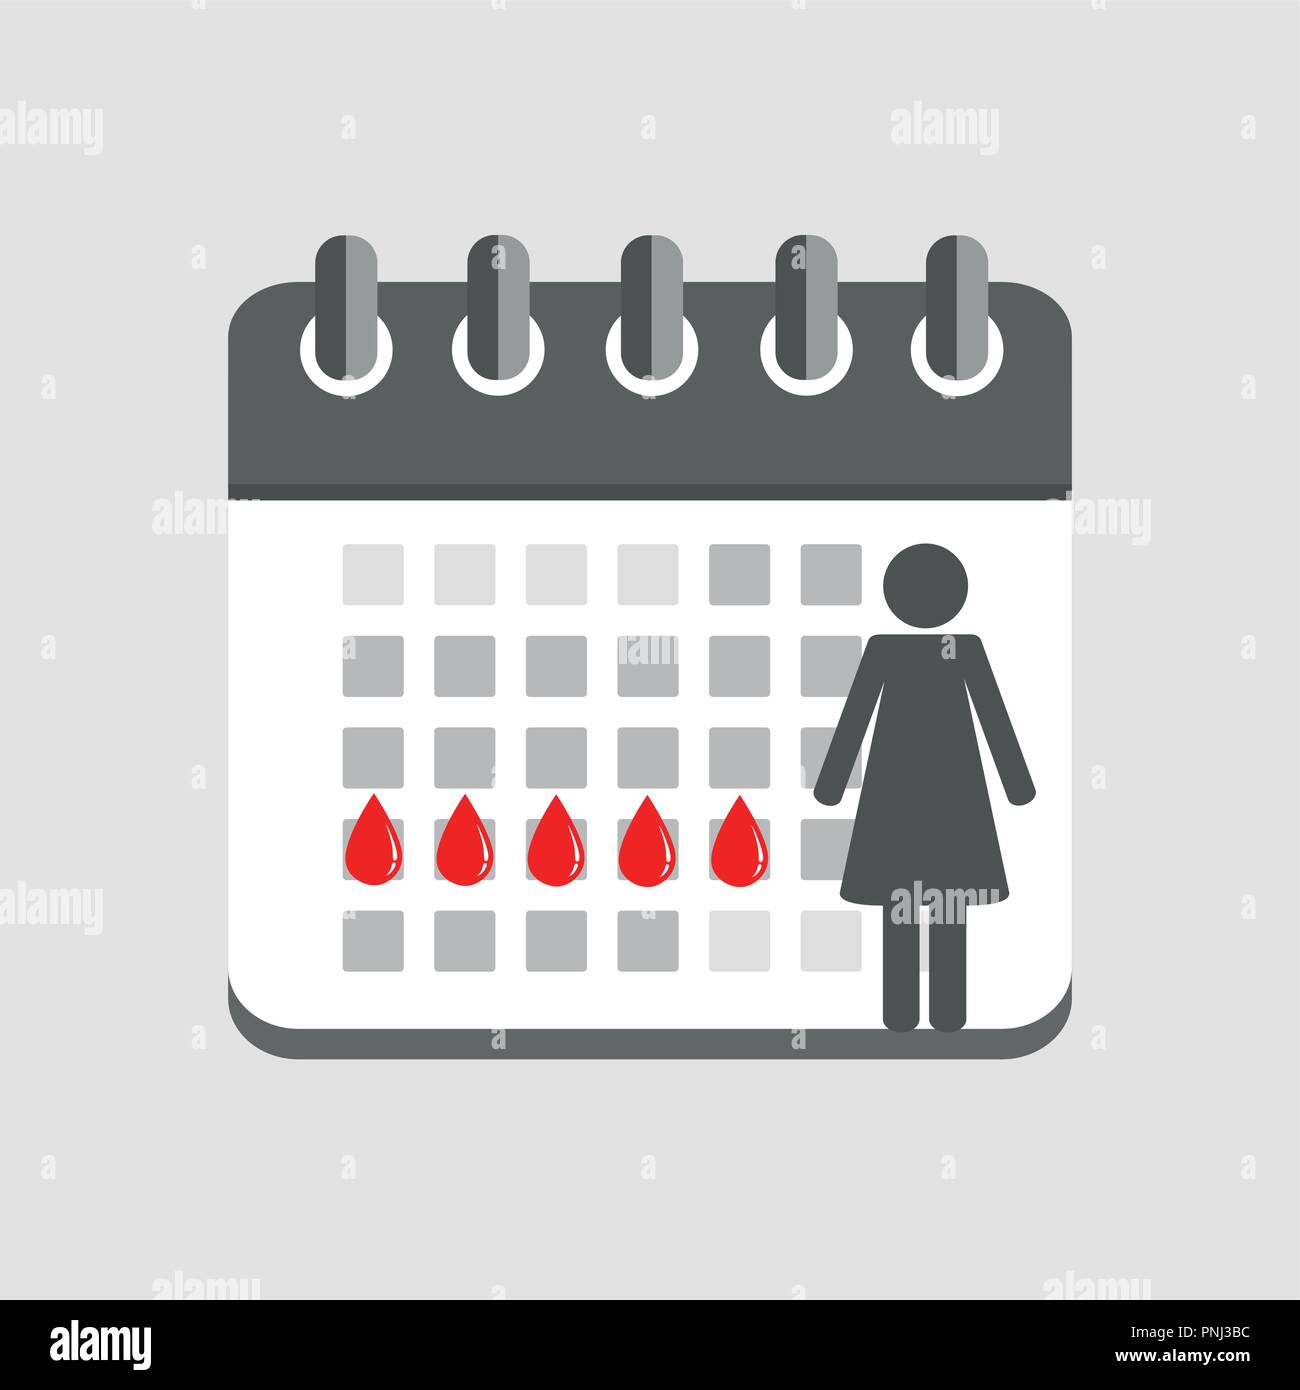 menstruation calendar red signs of menstrual cycle vector illustration EPS10 Stock Vector